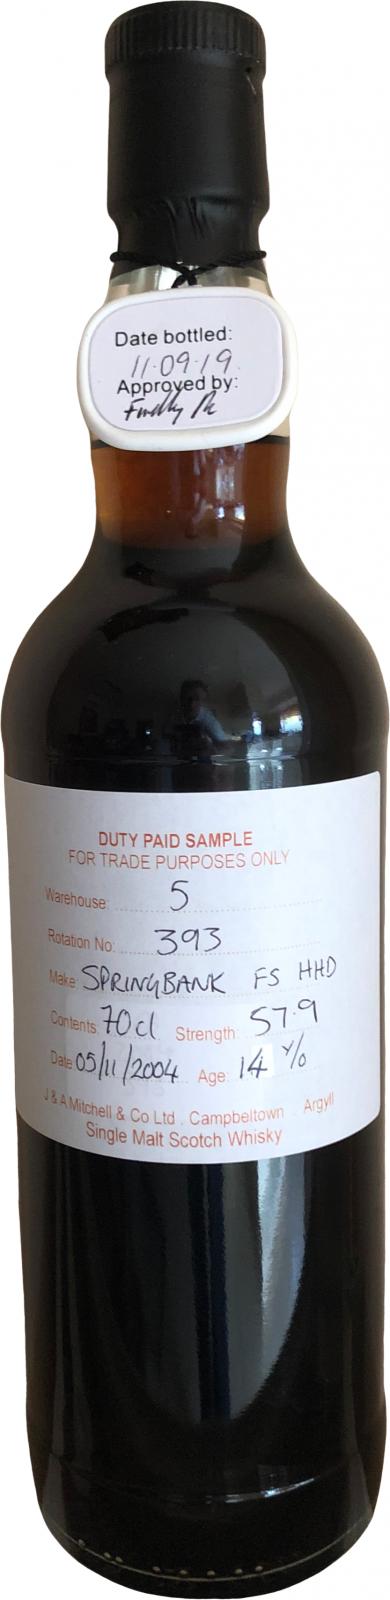 Springbank 2004 Duty Paid Sample For Trade Purposes Only Fresh Sherry Hogshead Rotation 393 57.9% 700ml